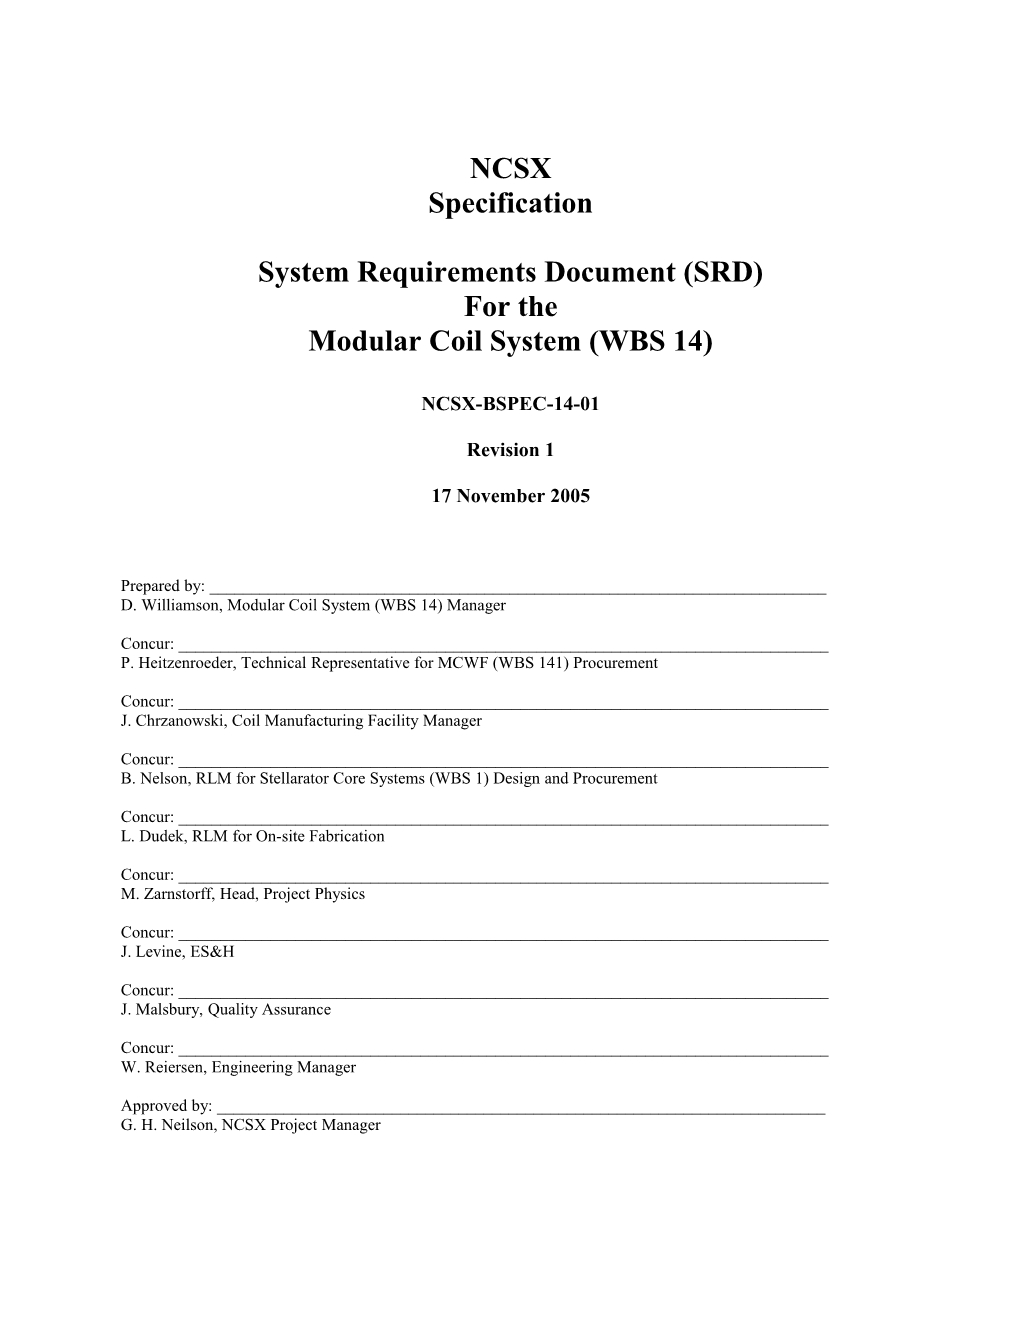 Modular Coil System Requirementsncsx BSPEC-14-01